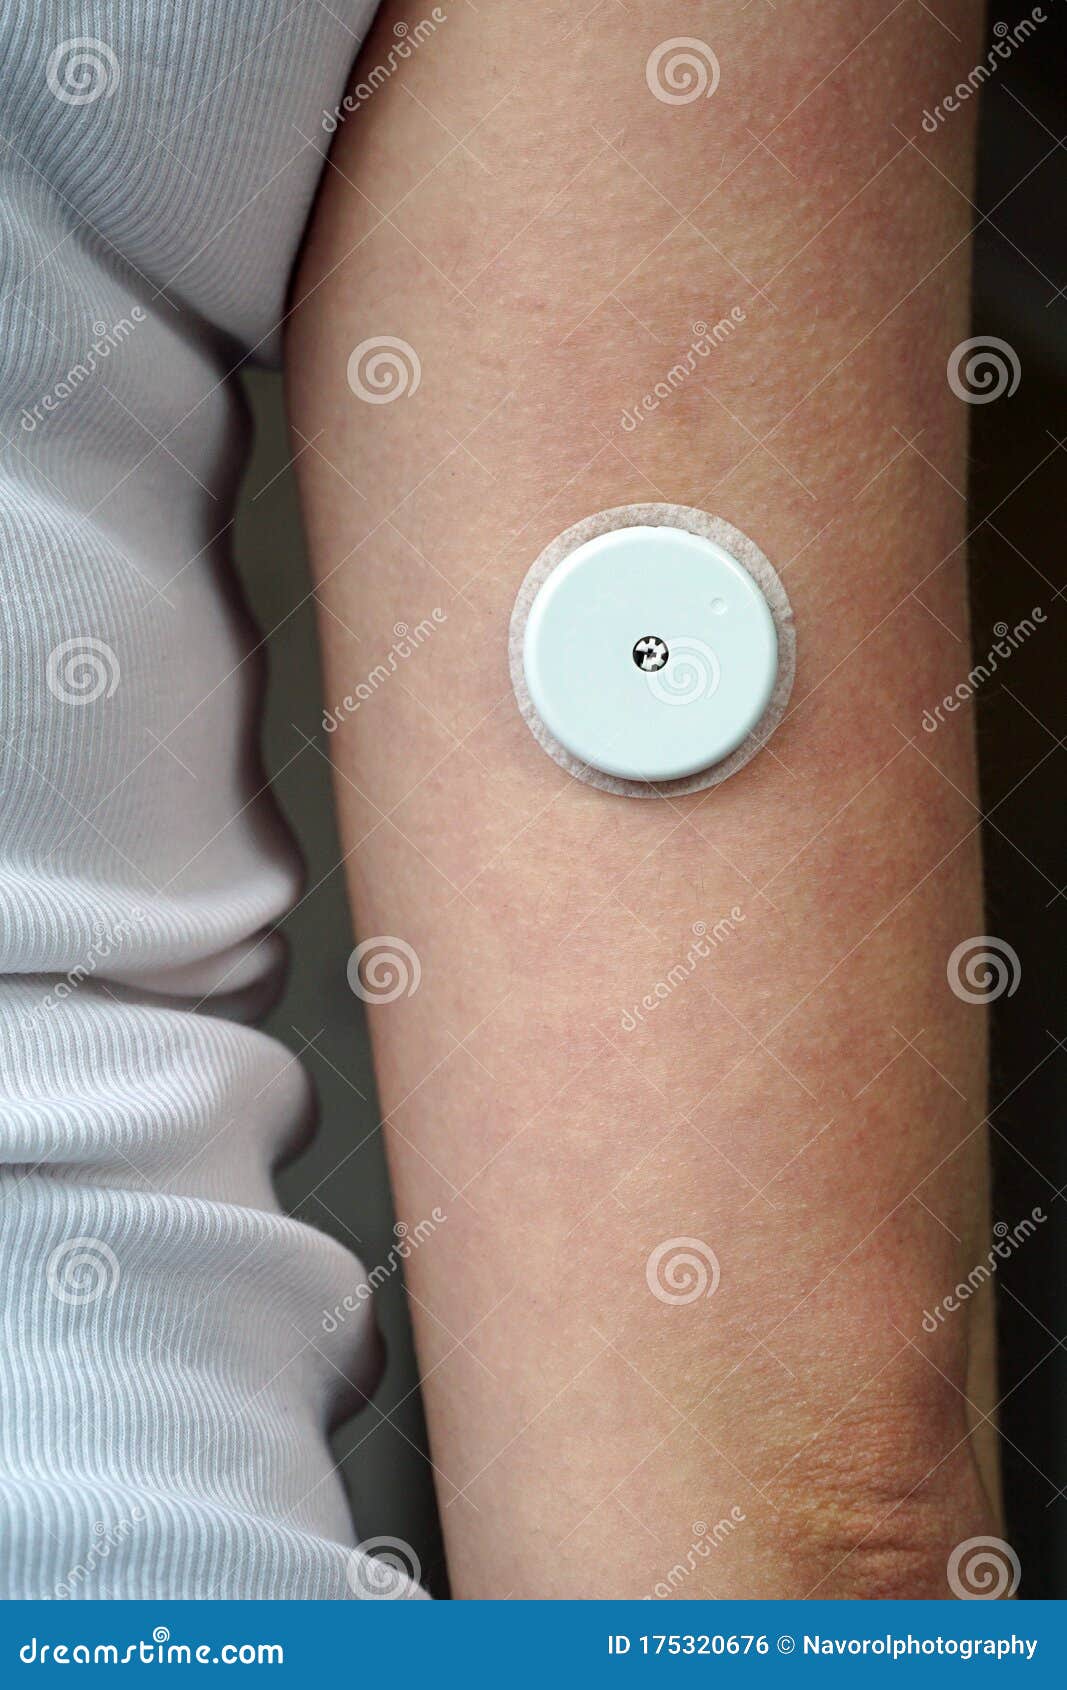 freestyle libre sensor on an arm